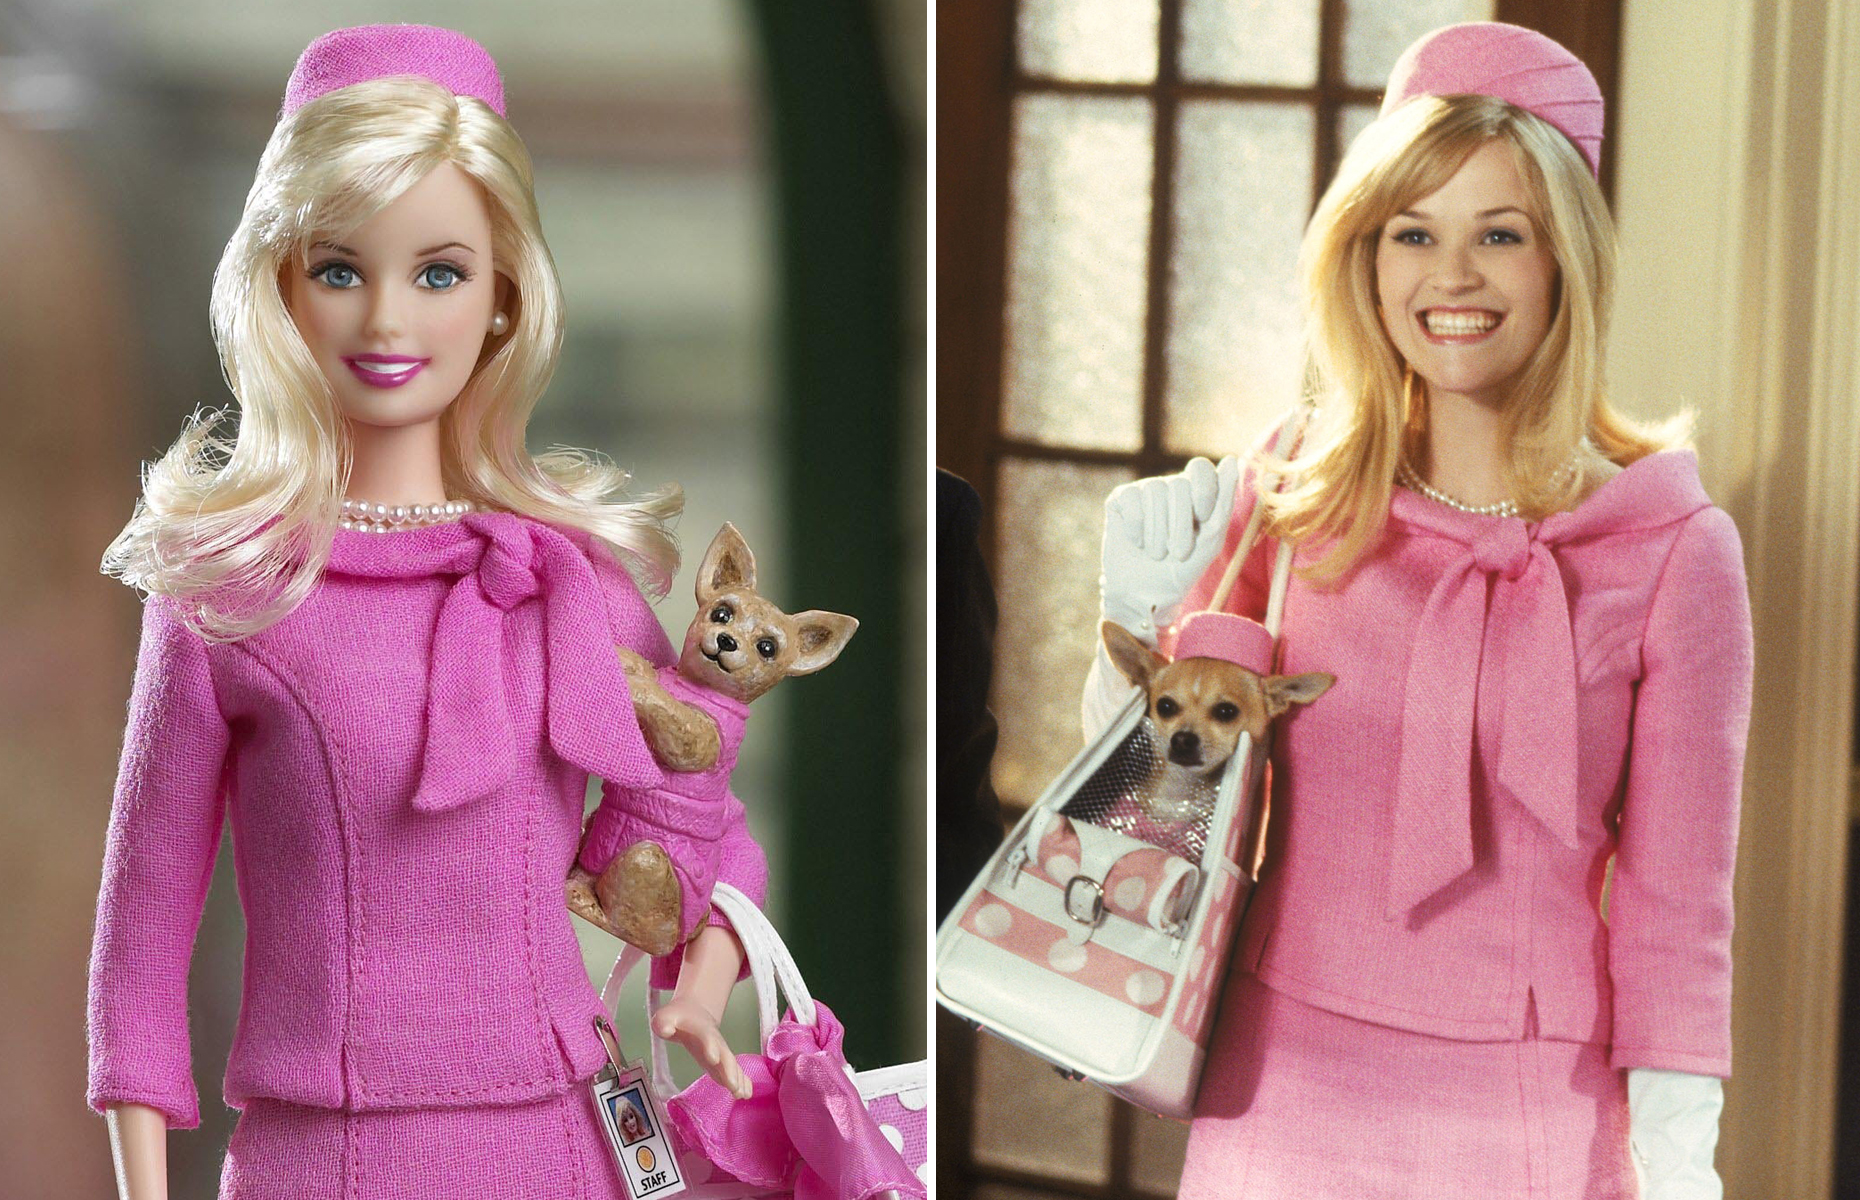 famous people barbie dolls